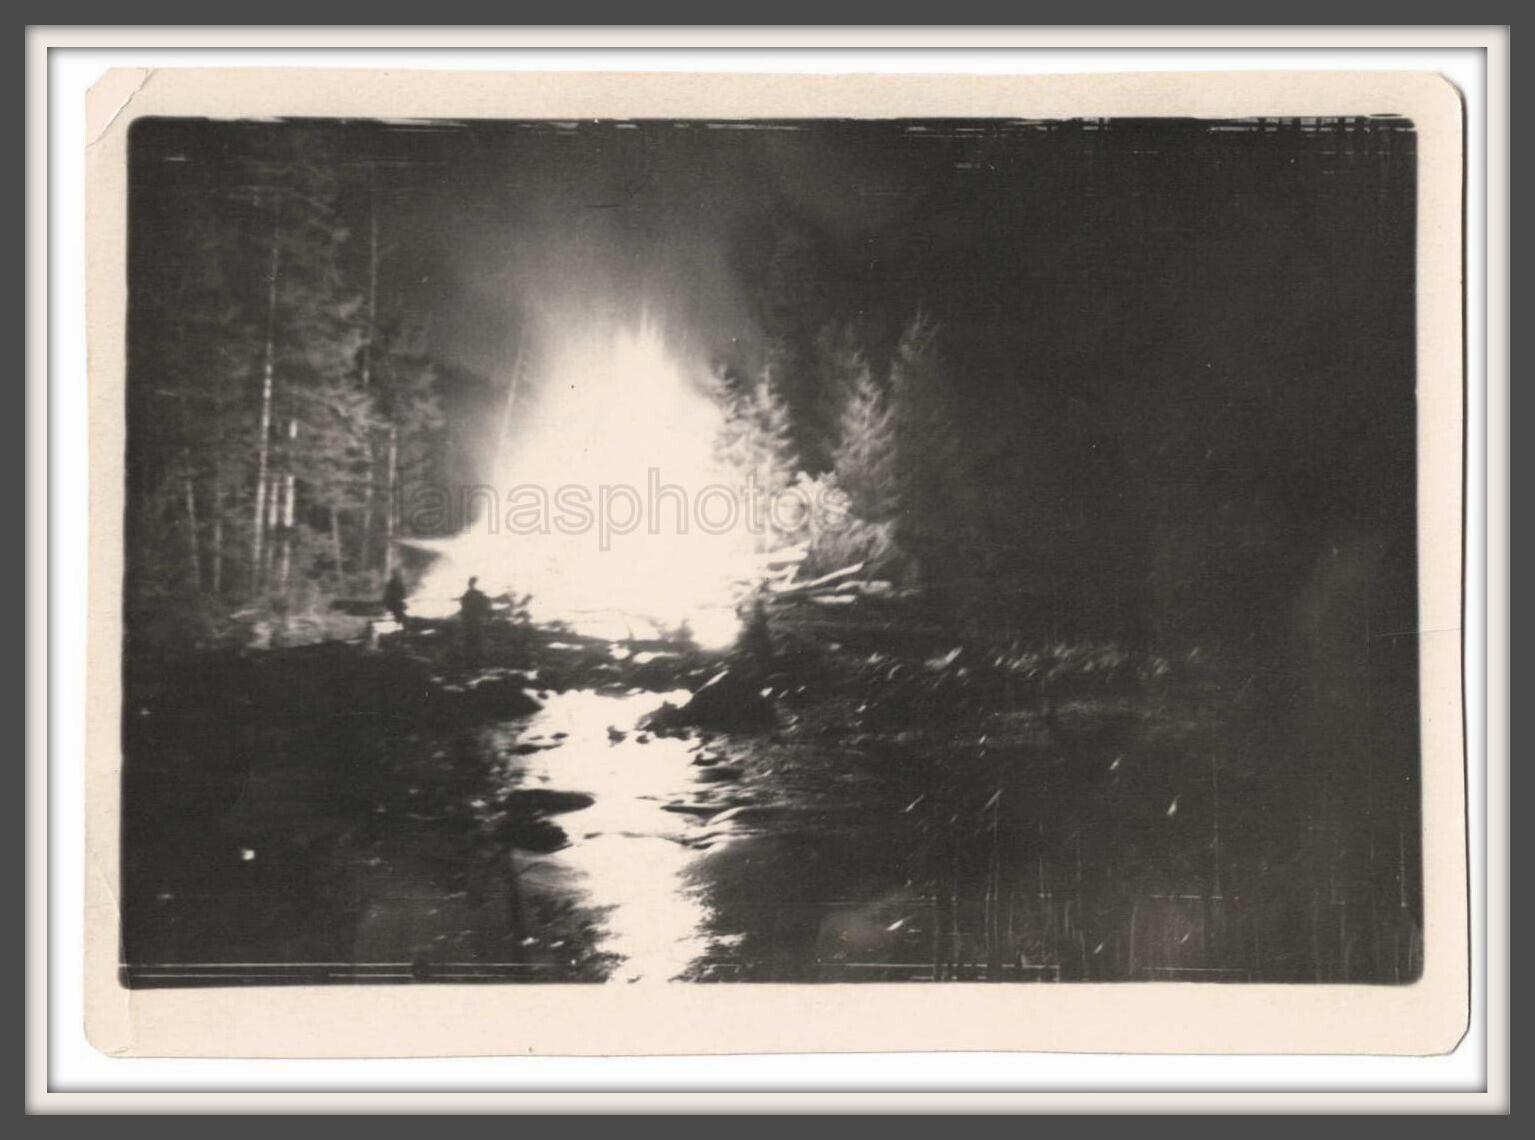 Night shoot Light Darkness Fire Blast Reflection abstract unusual vintage photo